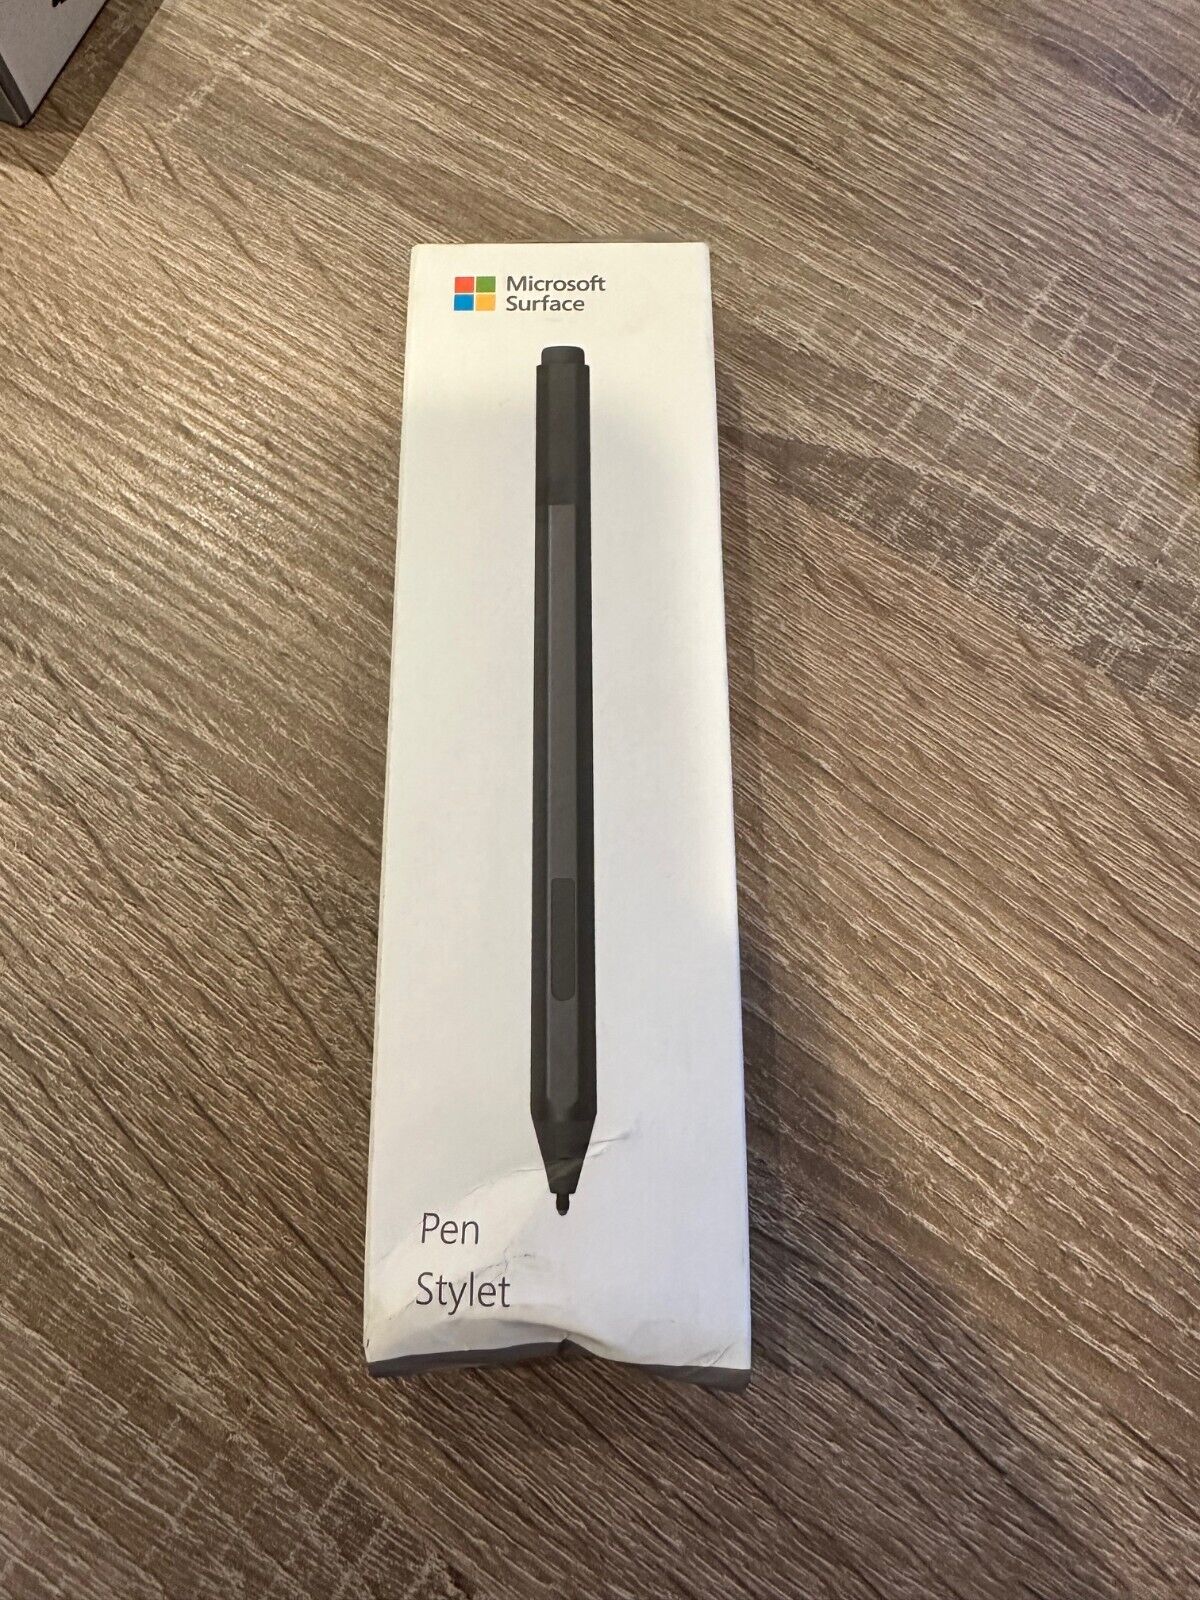 NEW DENTED BOX Microsoft Surface Model 1776 Pen Charcoal Black EYU-00001